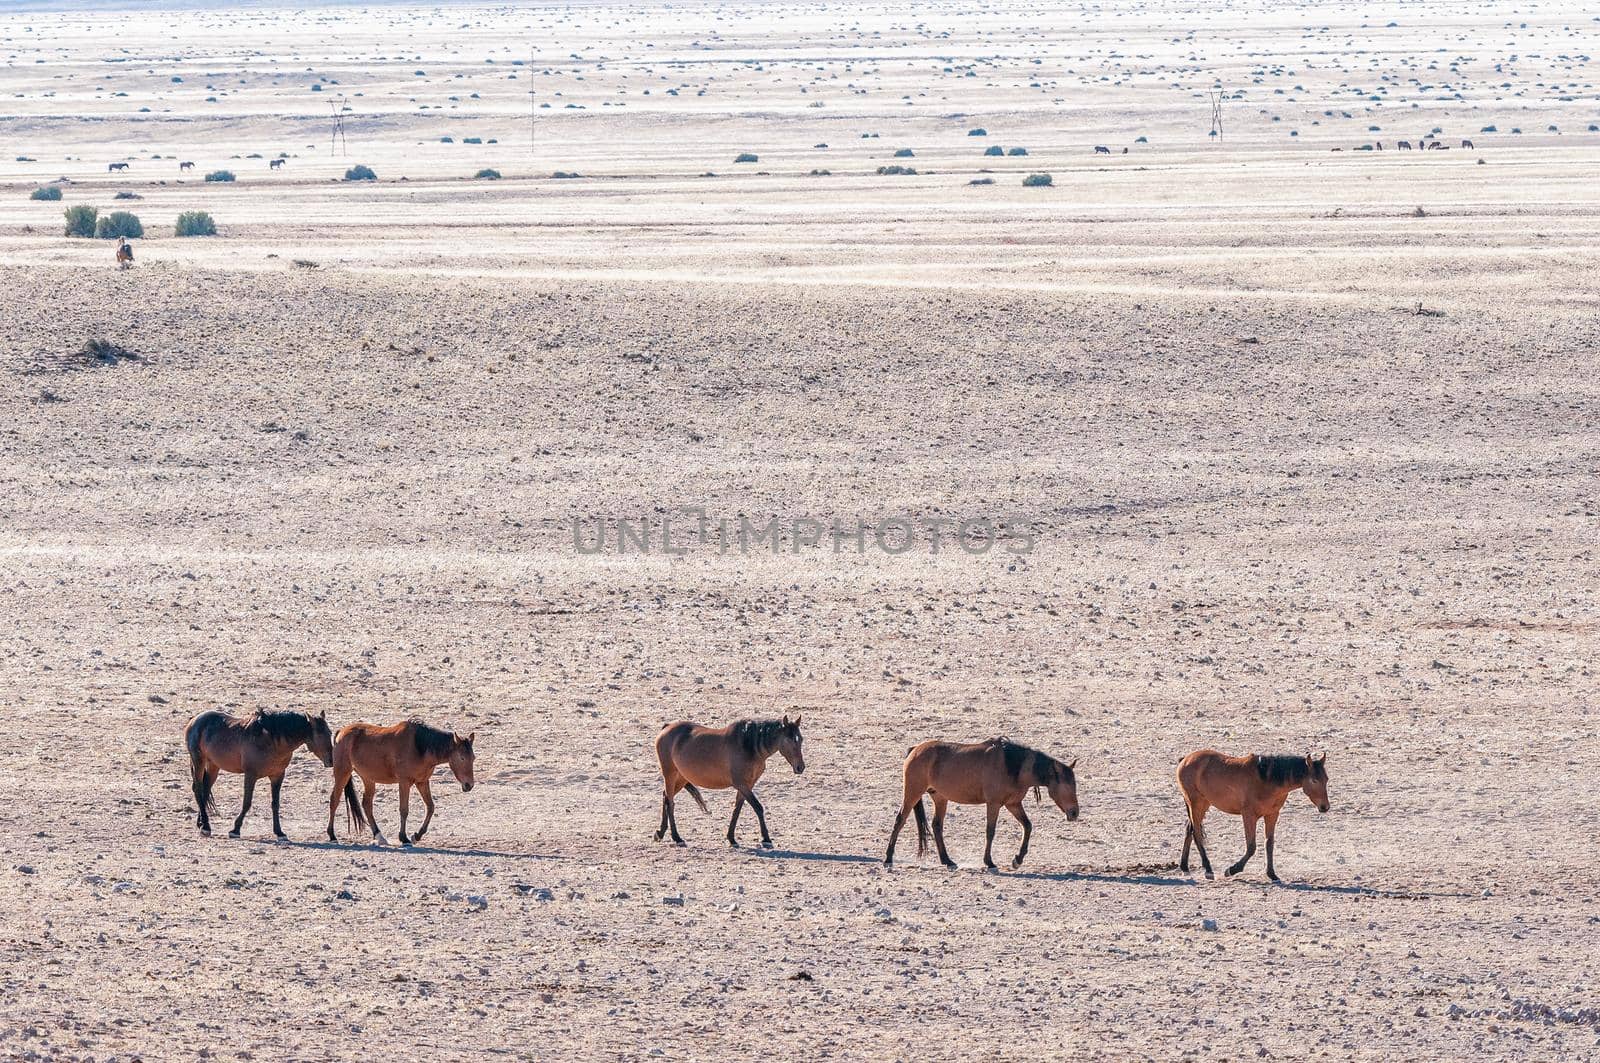 A view of wild horses of the Namib walking in a row at Garub near Aus